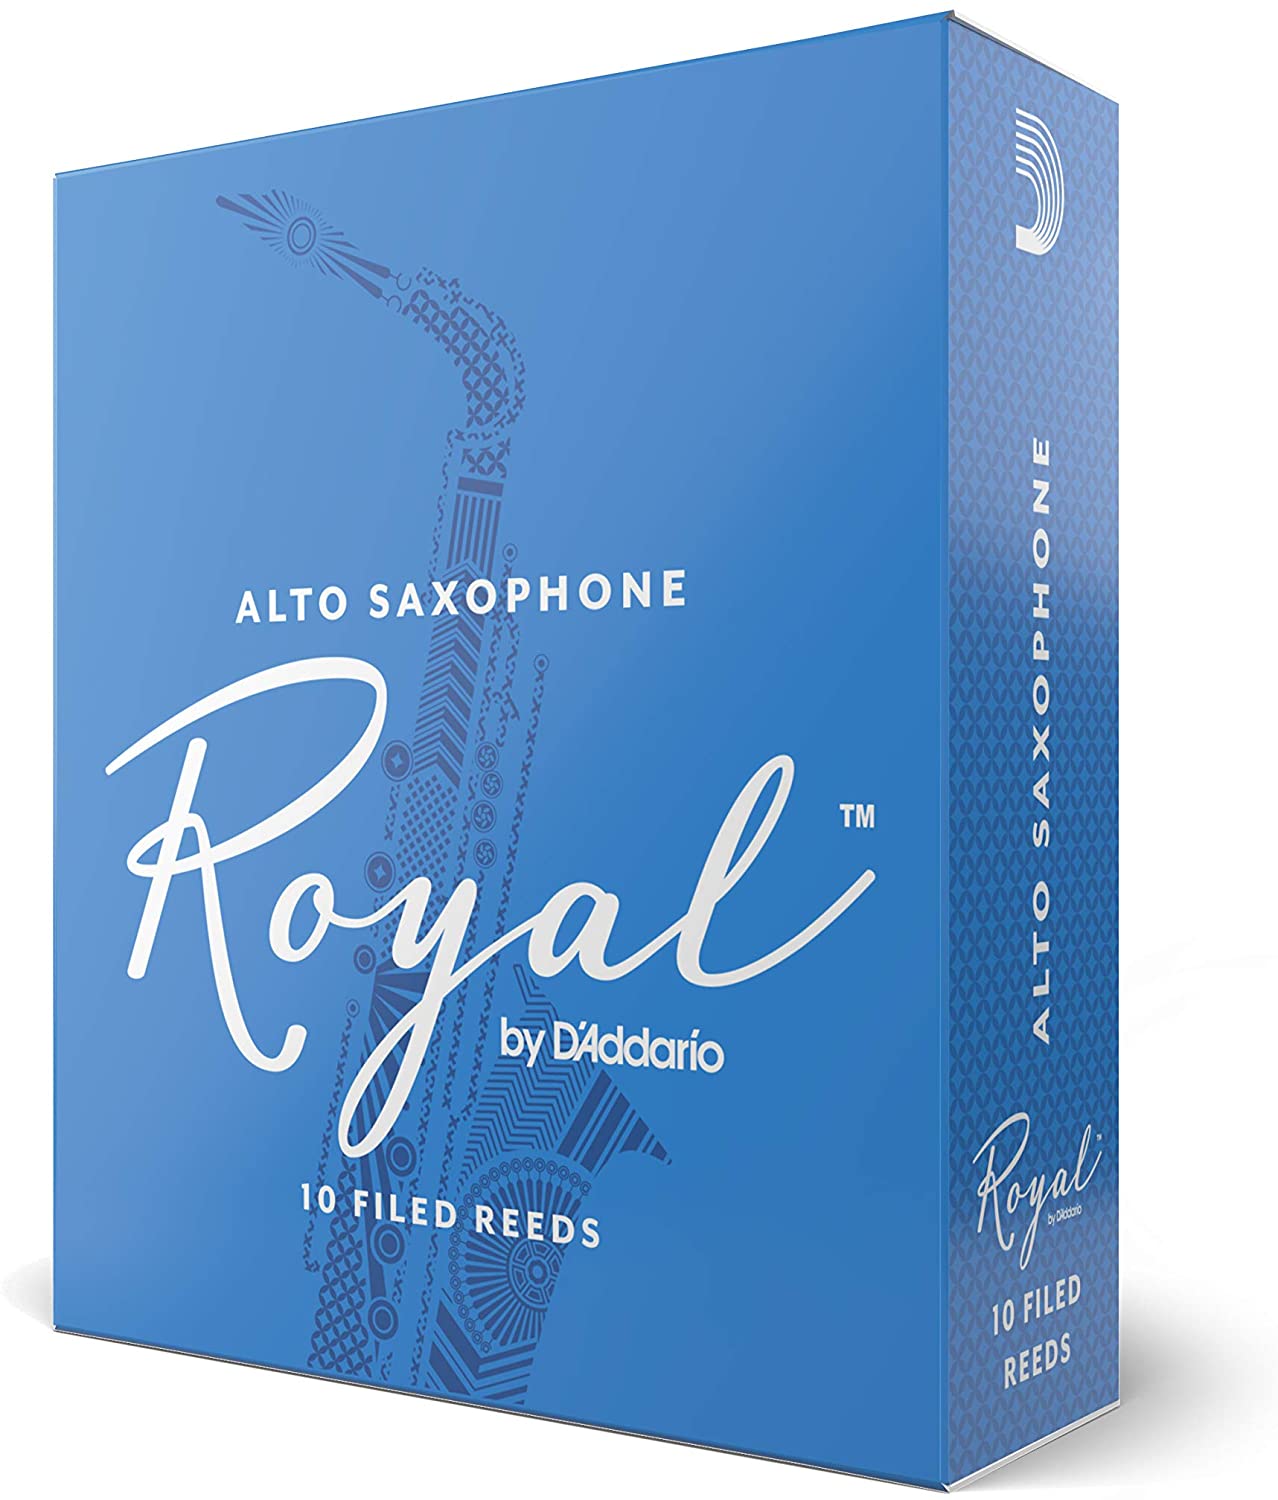 Royal by D'addario Eb Alto Saxohpone Reeds, 10pcs box (assorted strength)